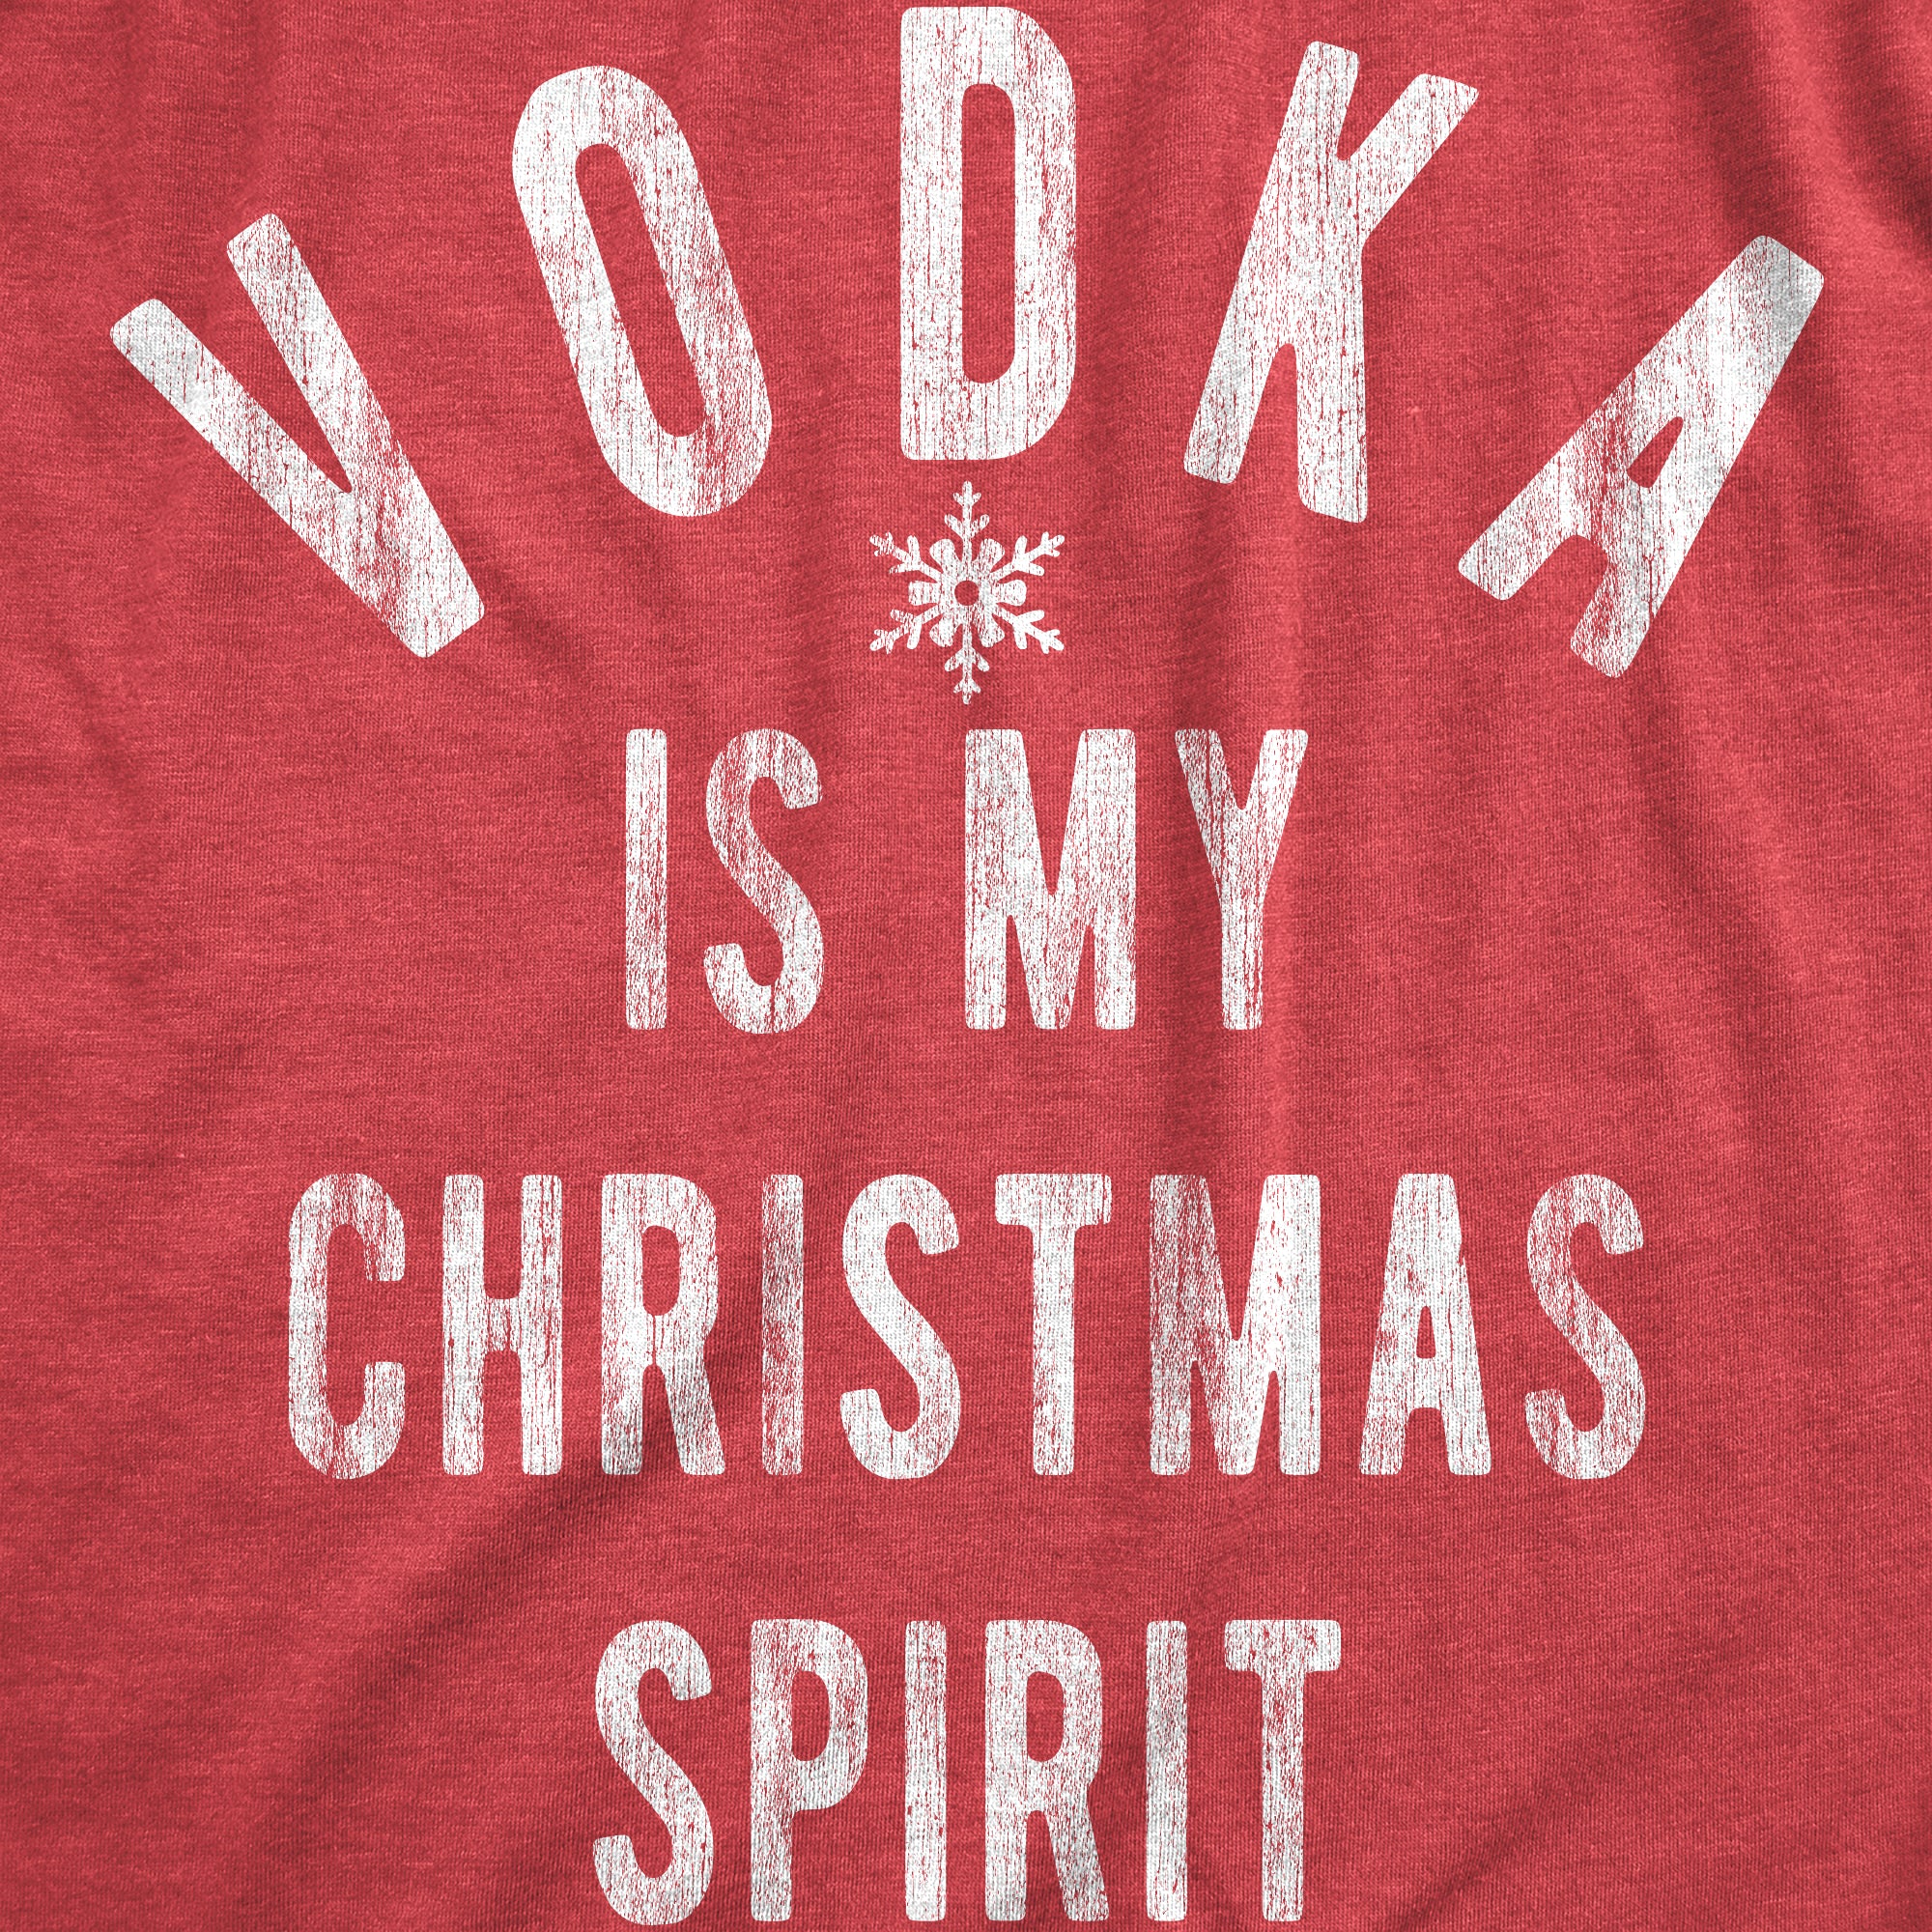 Funny Heather Red - VODKA Vodka Is My Christmas Spirit Womens T Shirt Nerdy Christmas Liquor Drinking Tee